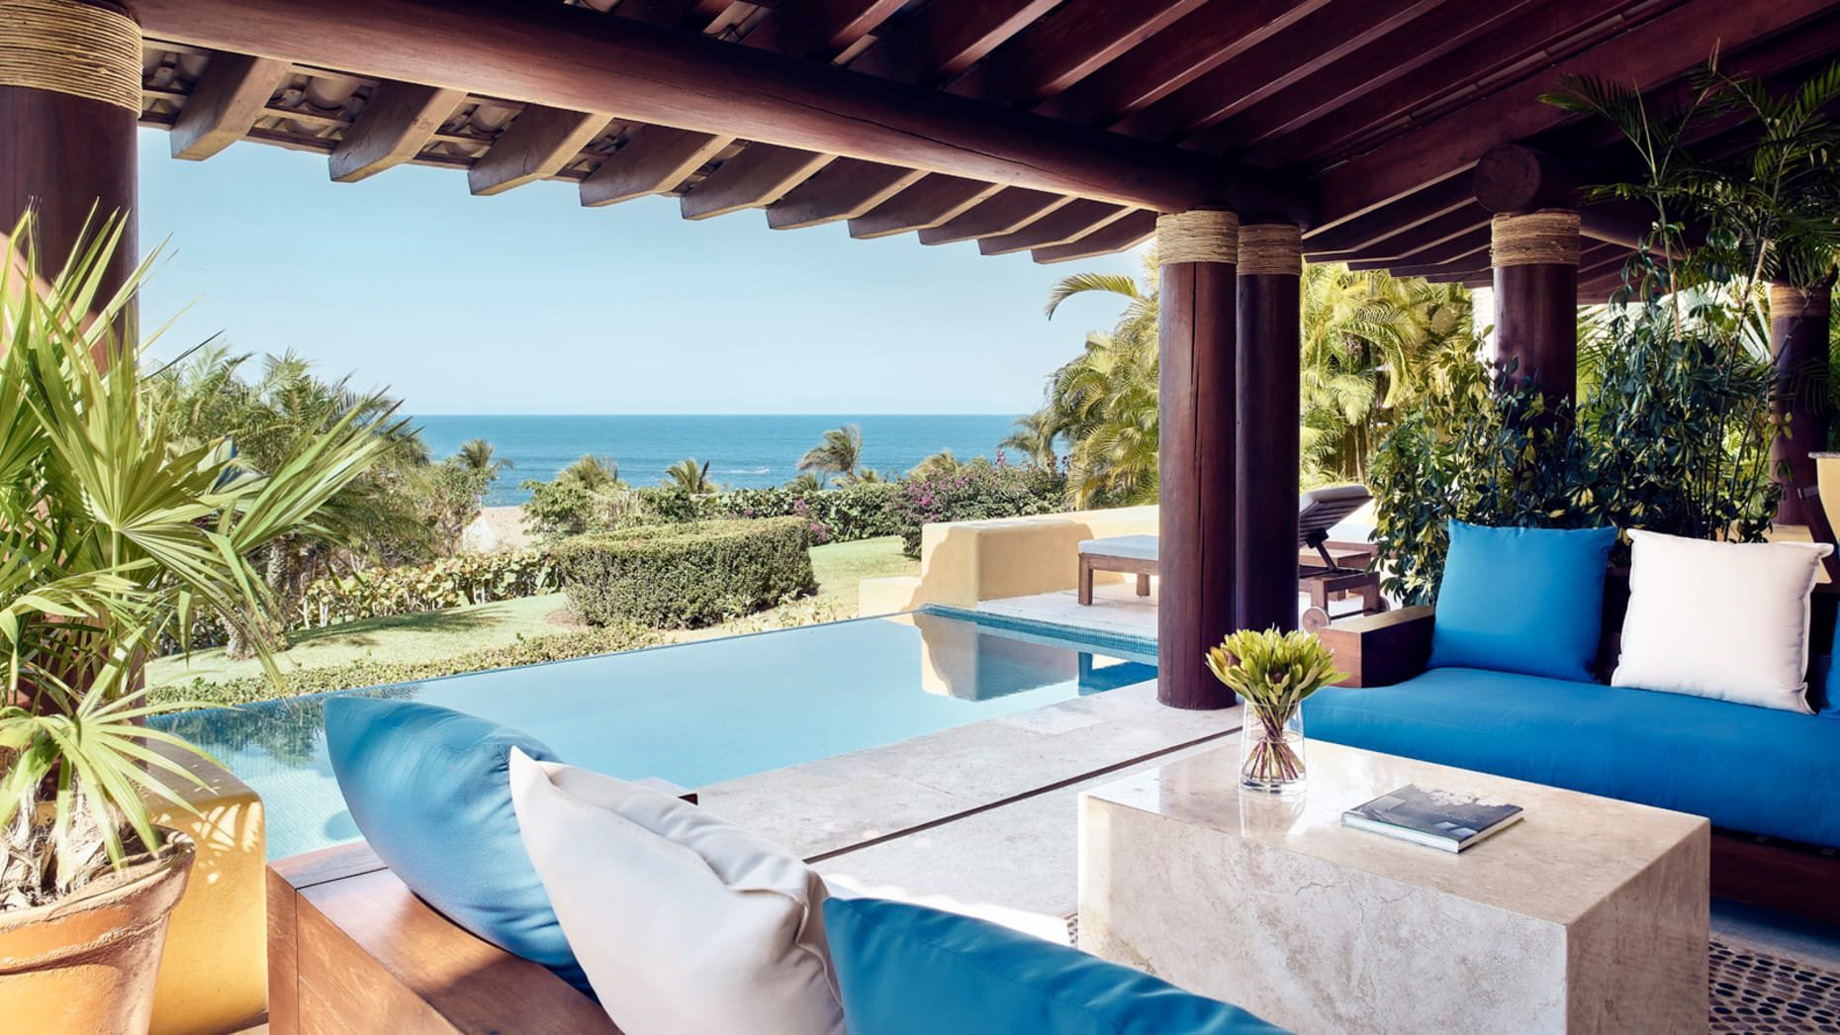 Four Seasons Resort Punta Mita – Nayarit, Mexico – Primavera Ocean View Villa Covered Pool Deck